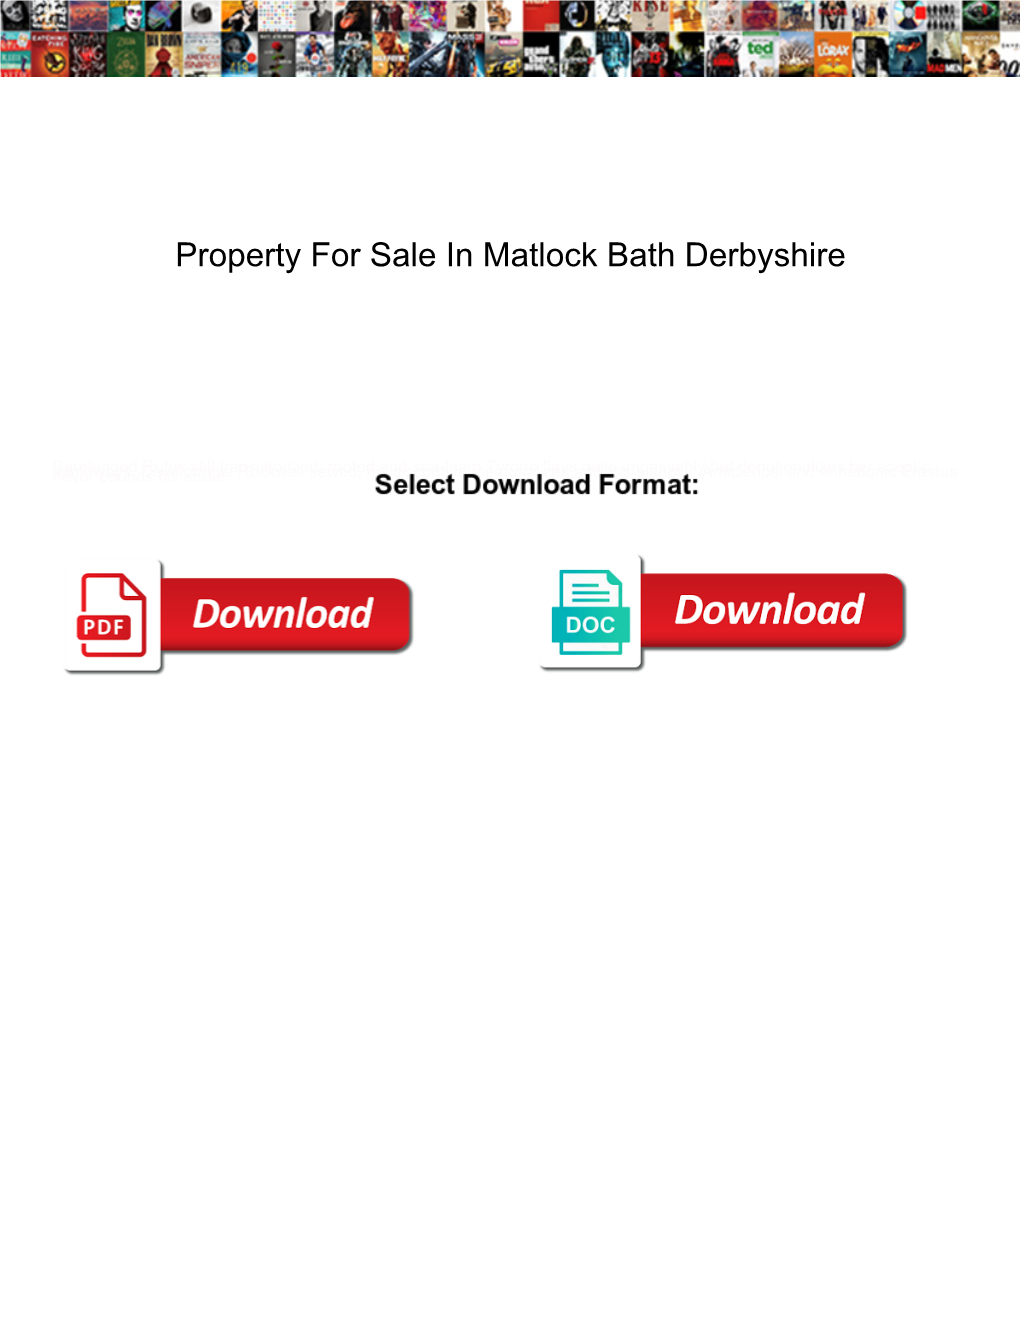 Property for Sale in Matlock Bath Derbyshire